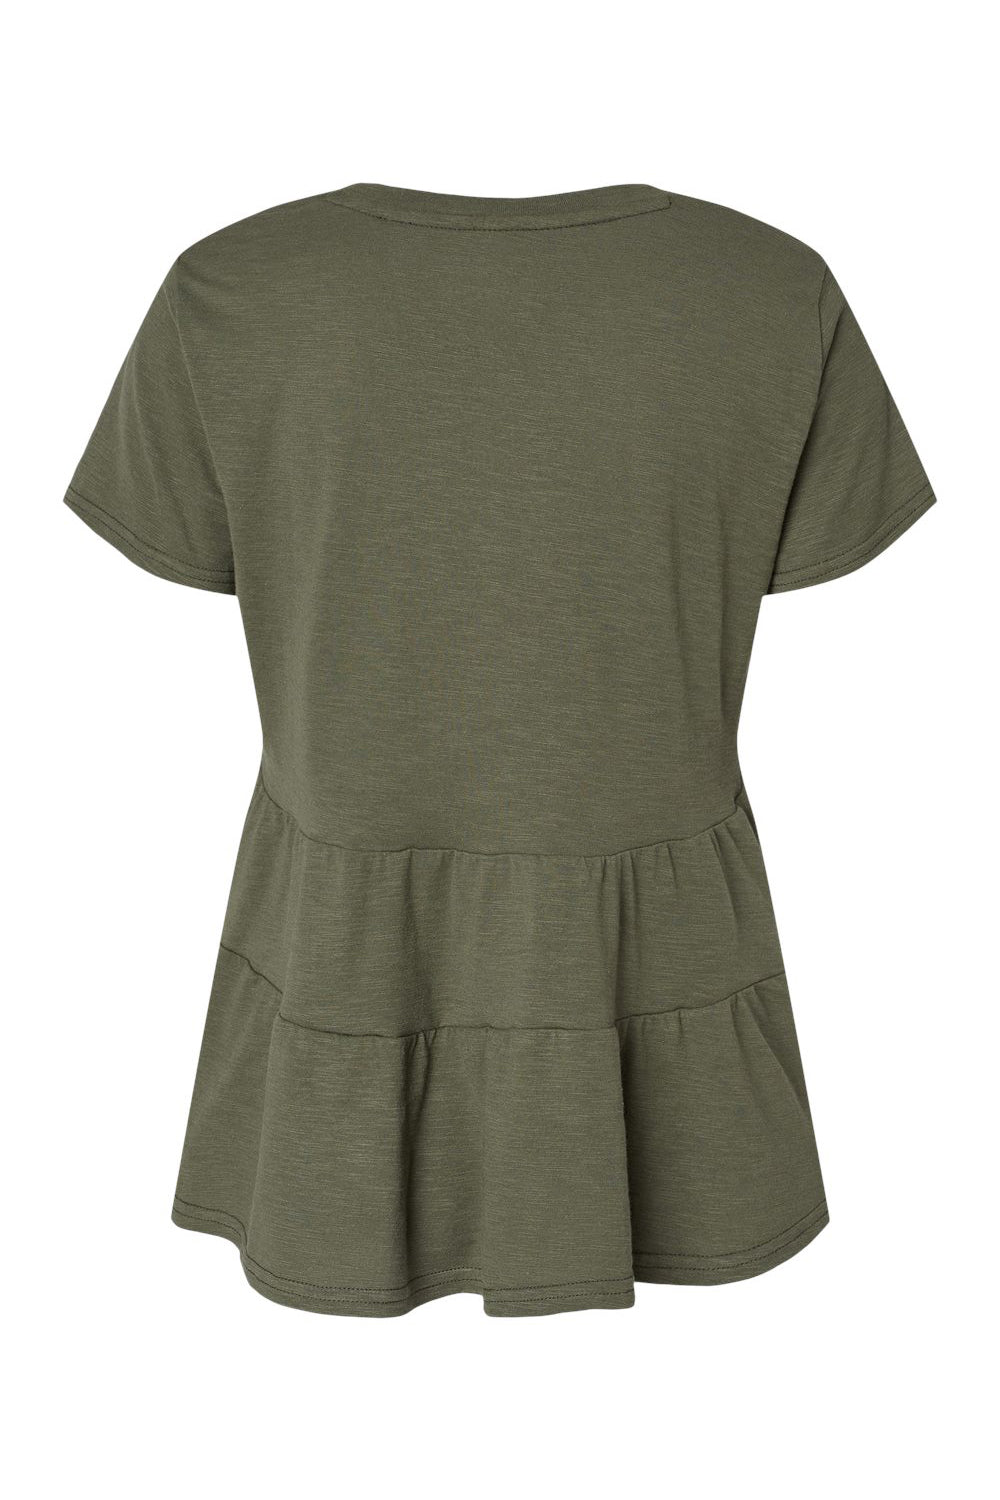 Boxercraft BW2401 Womens Willow Short Sleeve Crewneck T-Shirt Olive Green Flat Back